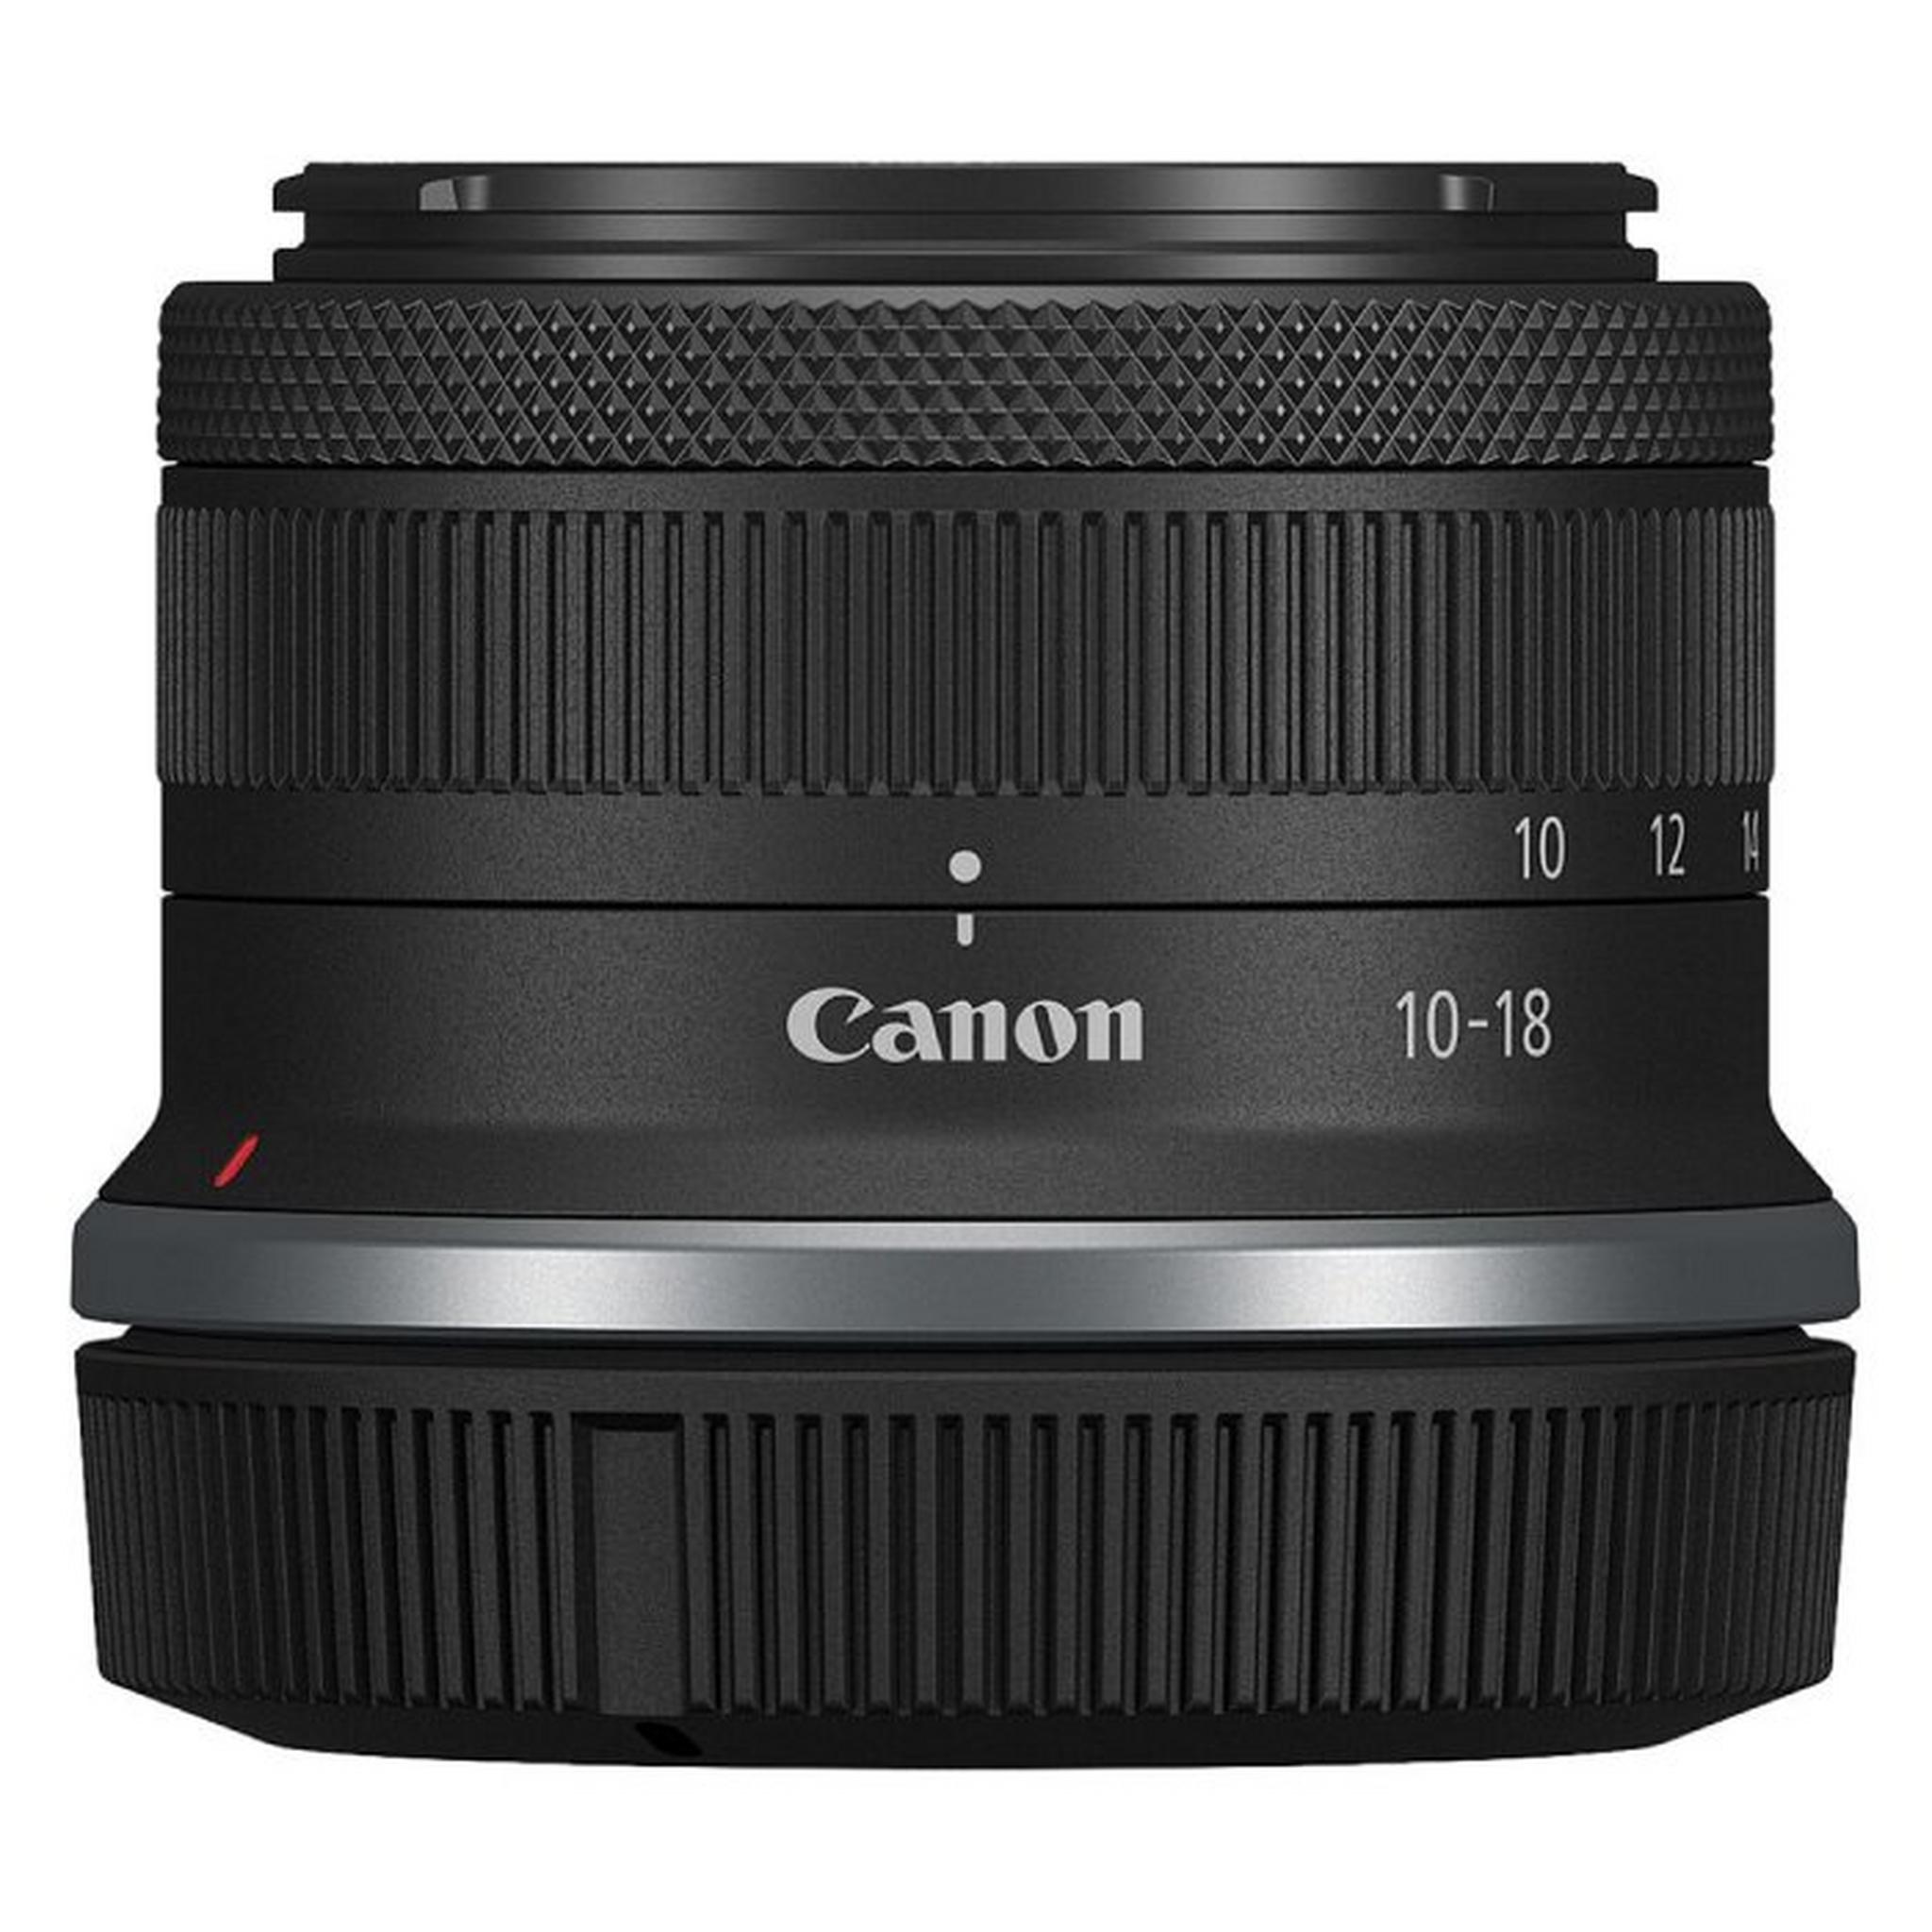 CANON RF 10-18MM Lens, F/4.5-6.3 IS STM, 6262C005AA – Black